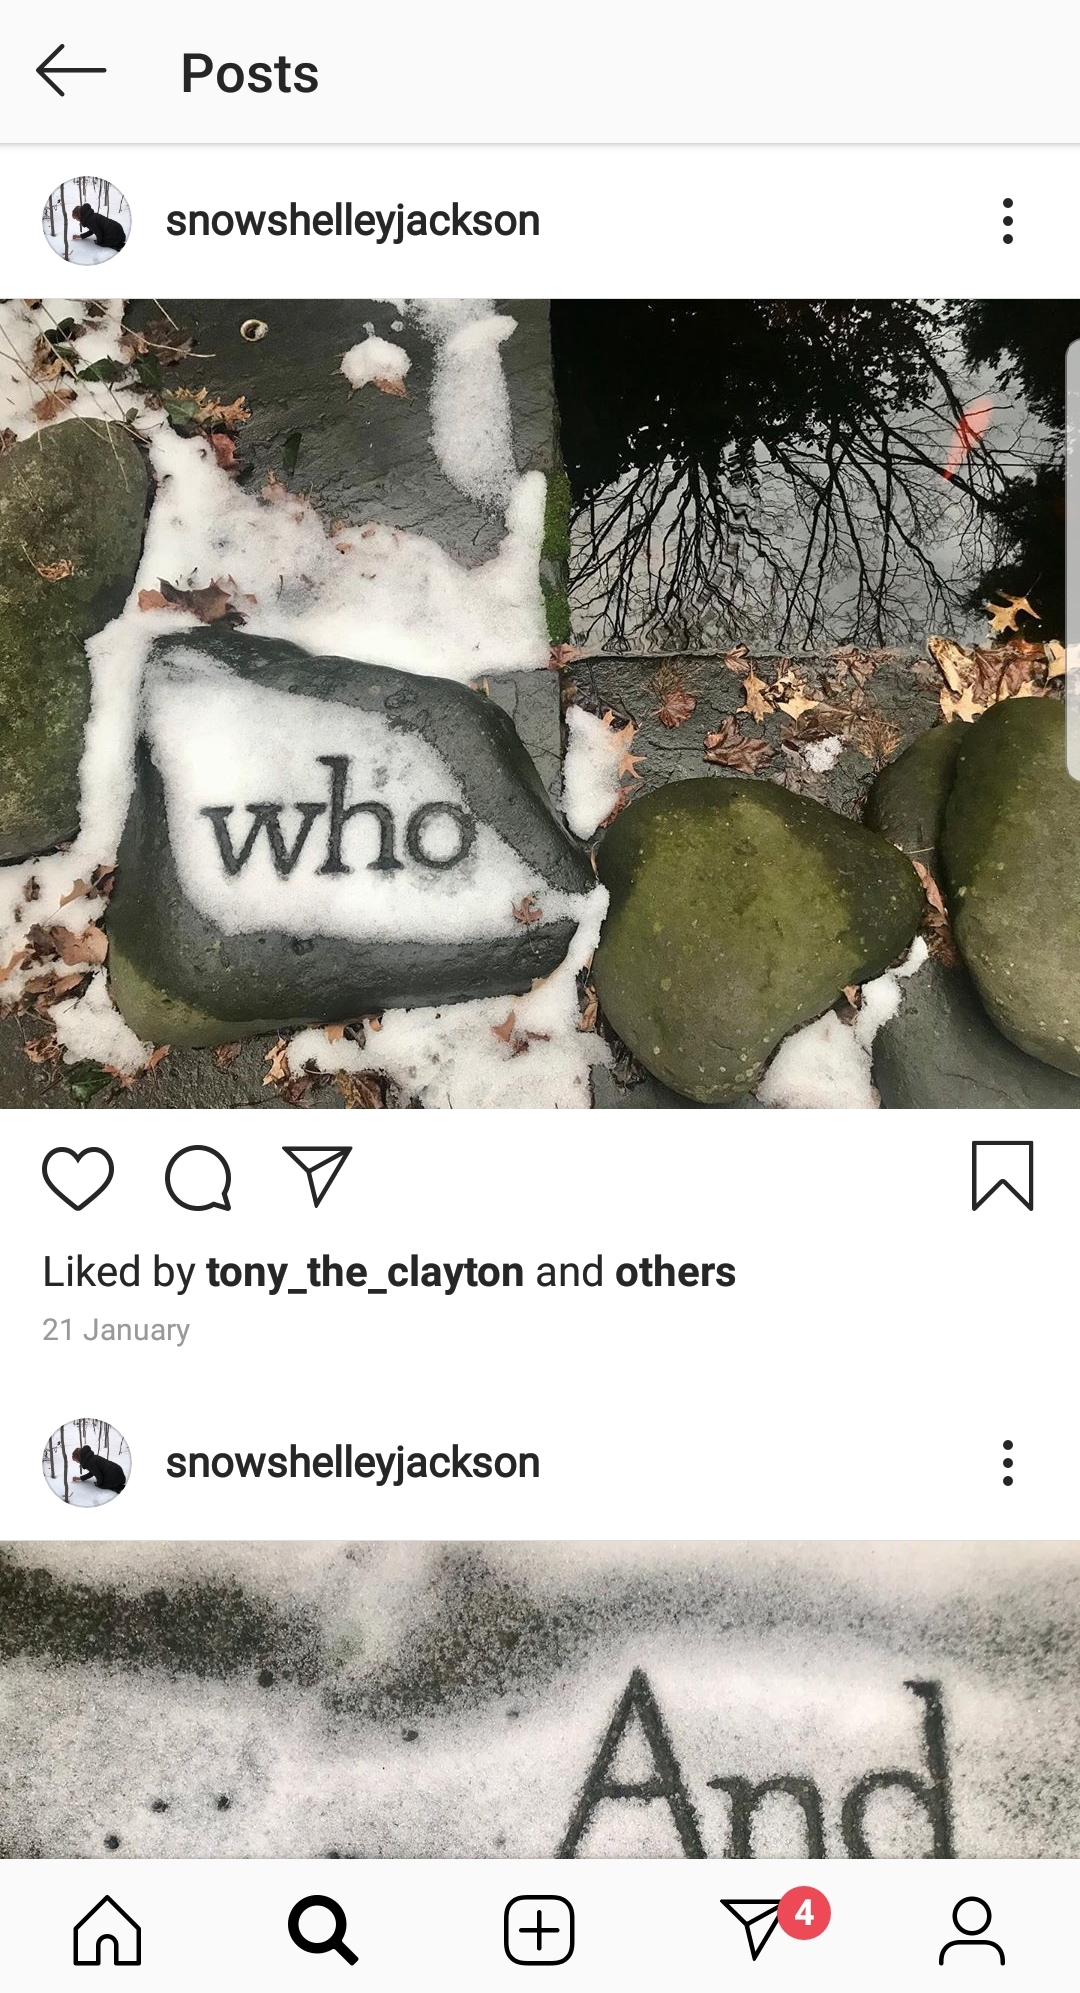 Jackson's 'Snow' on Instagram